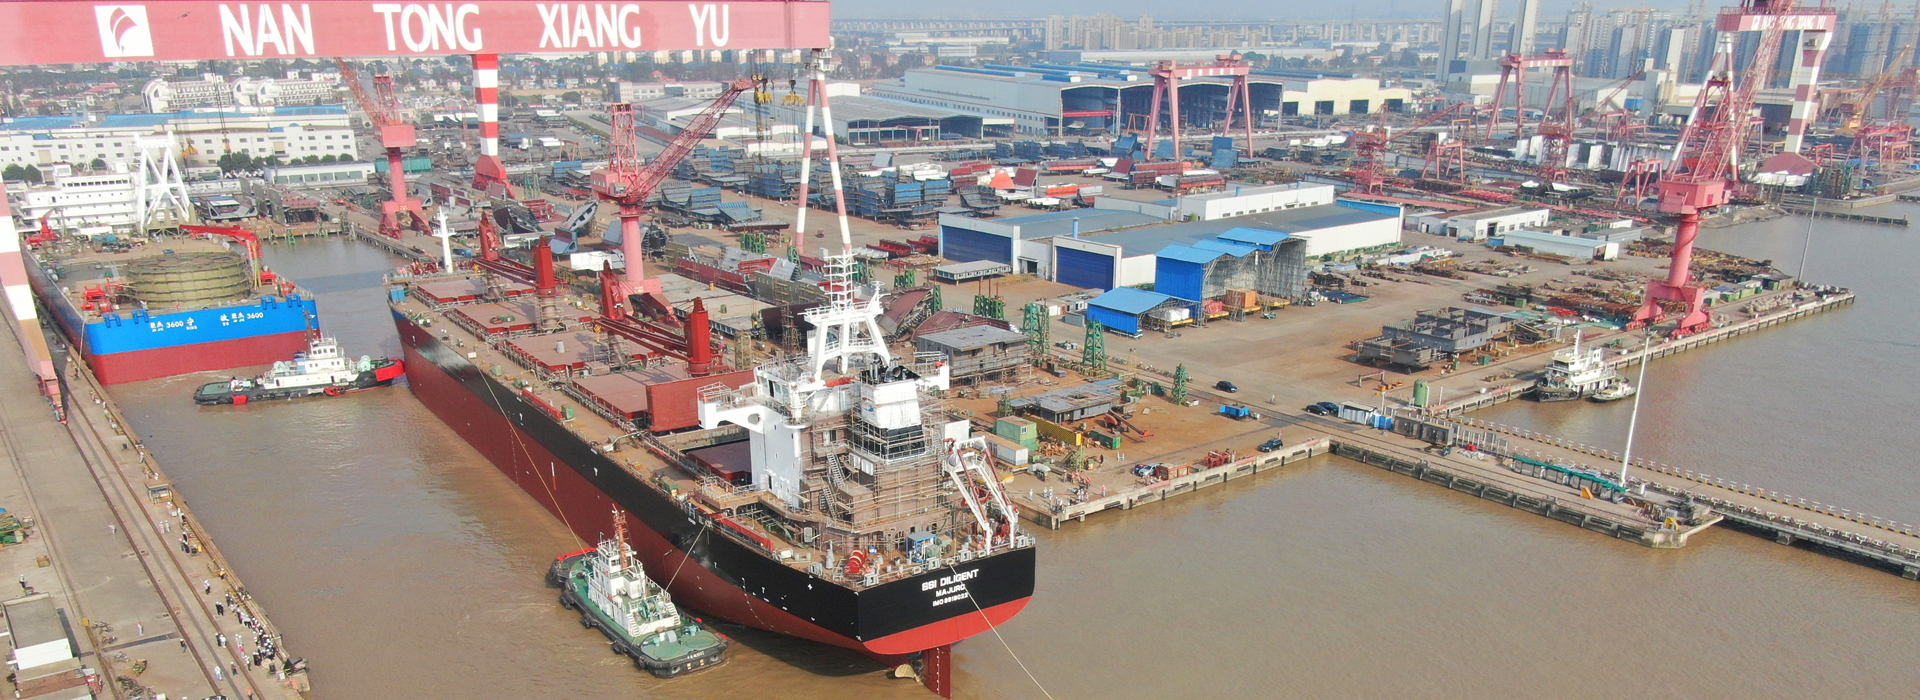 Tongzhou-based yard launches new ships